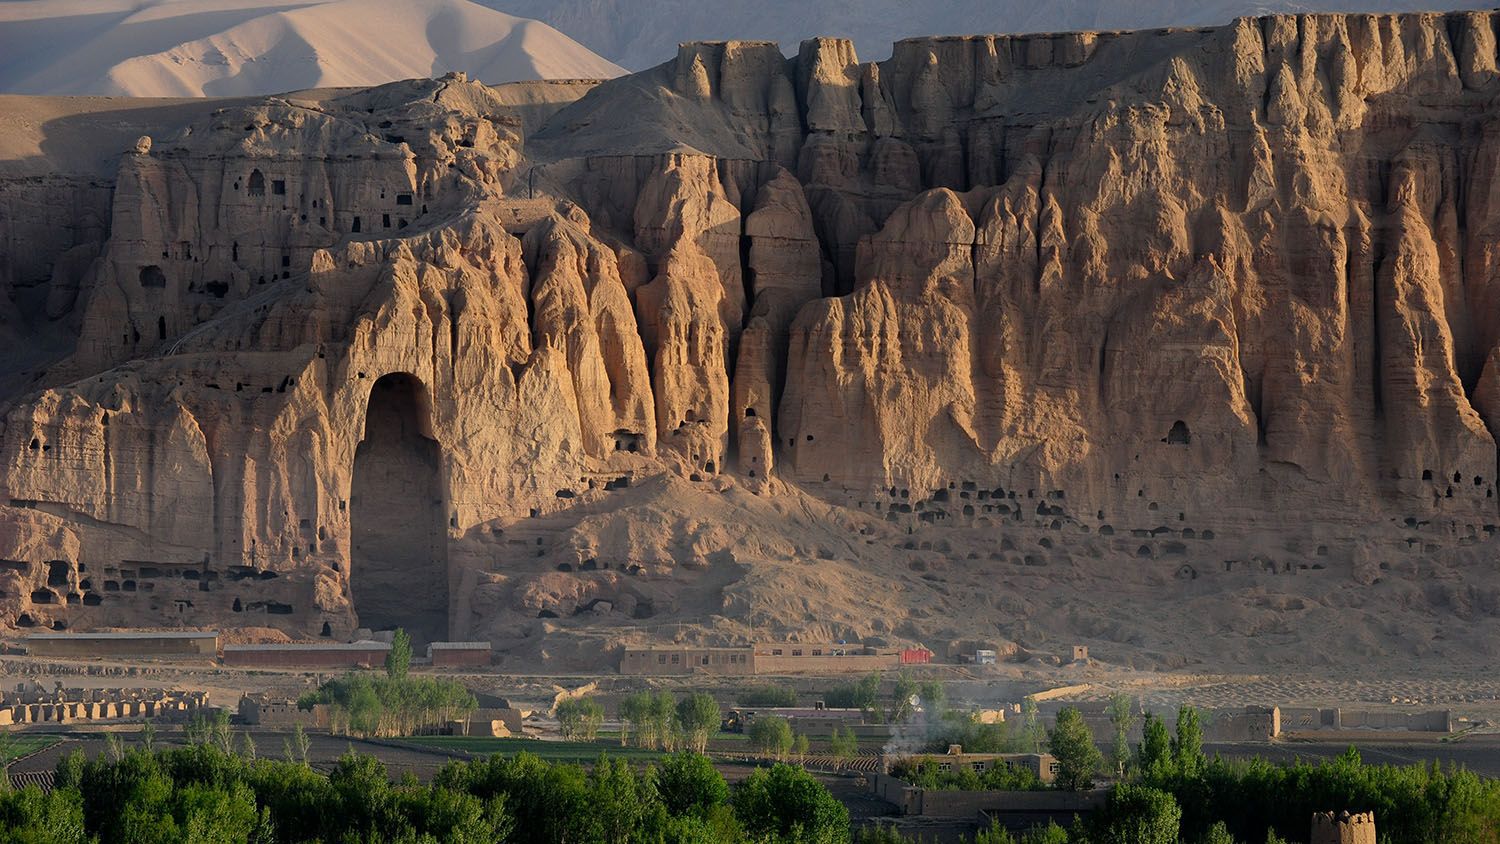 Bamyan: The Valley of Buddha